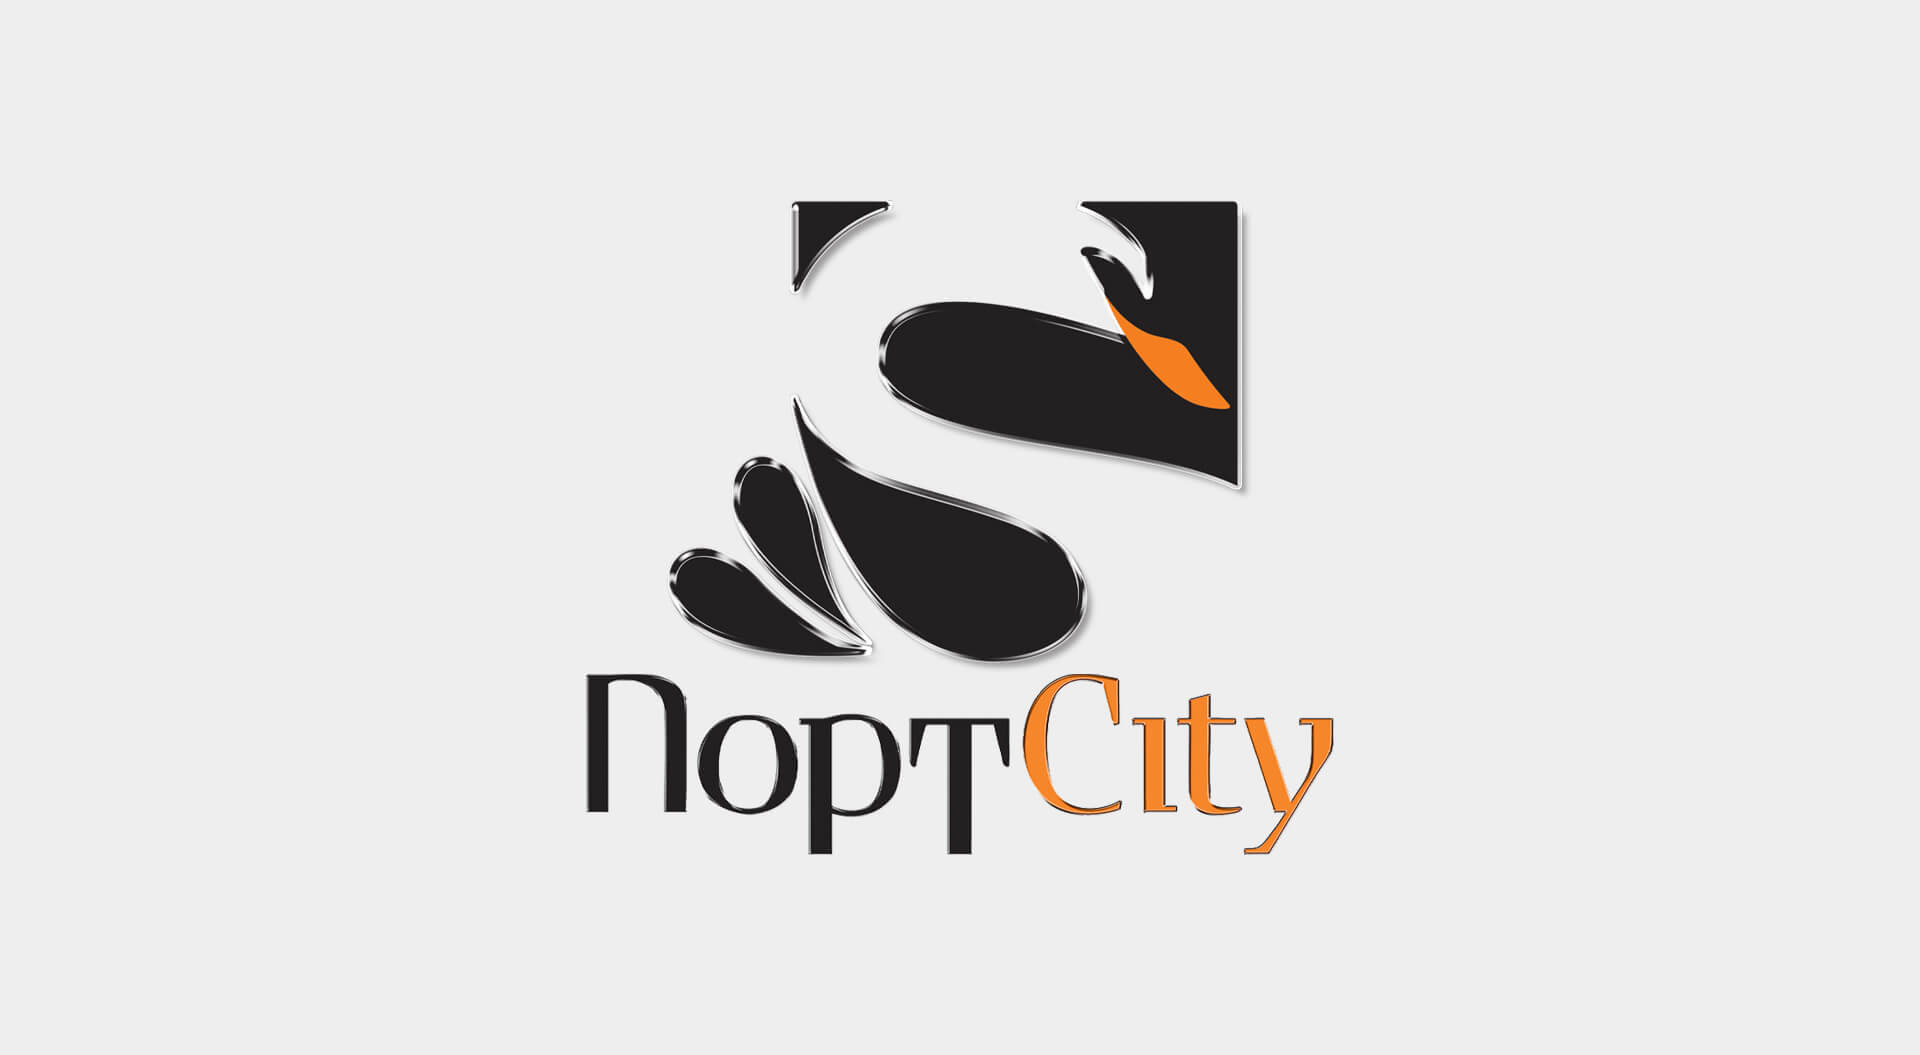 Port City Shopping Mall brand identity